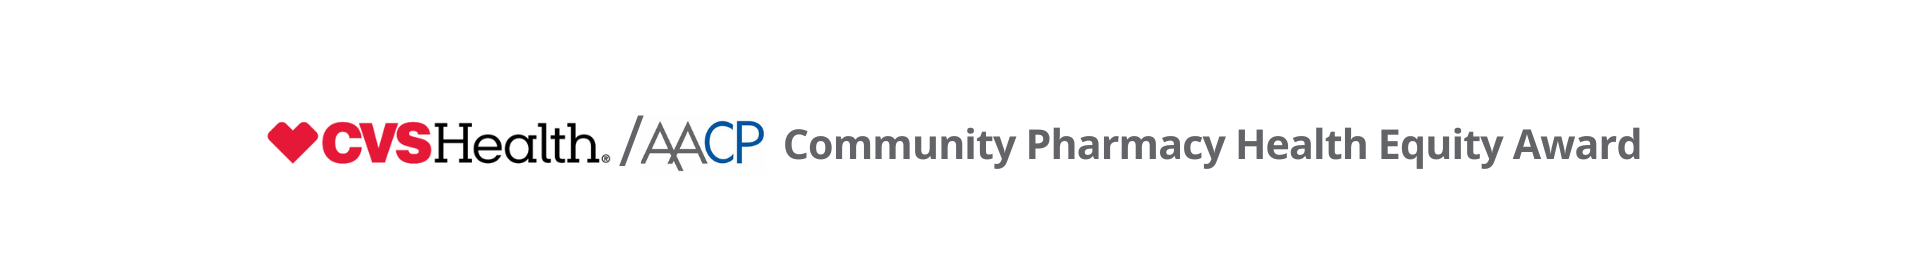 CVS Health / AACP Community Pharmacy Health Equity Award 